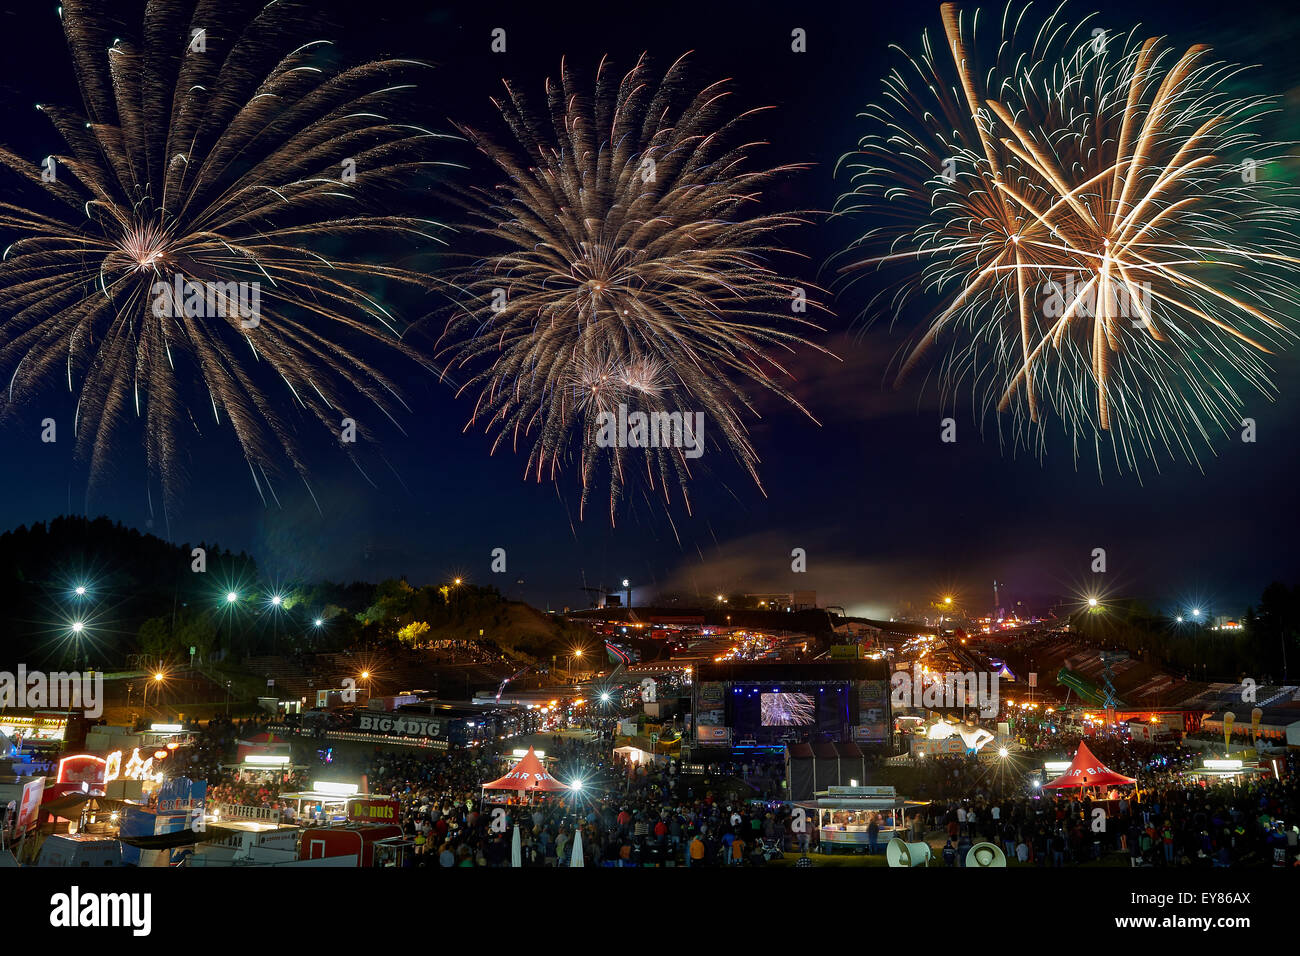 ADAC Truck Grand Prix, fireworks at night, Nürburgring, Nürburg, Rhineland-Palatinate, Germany Stock Photo